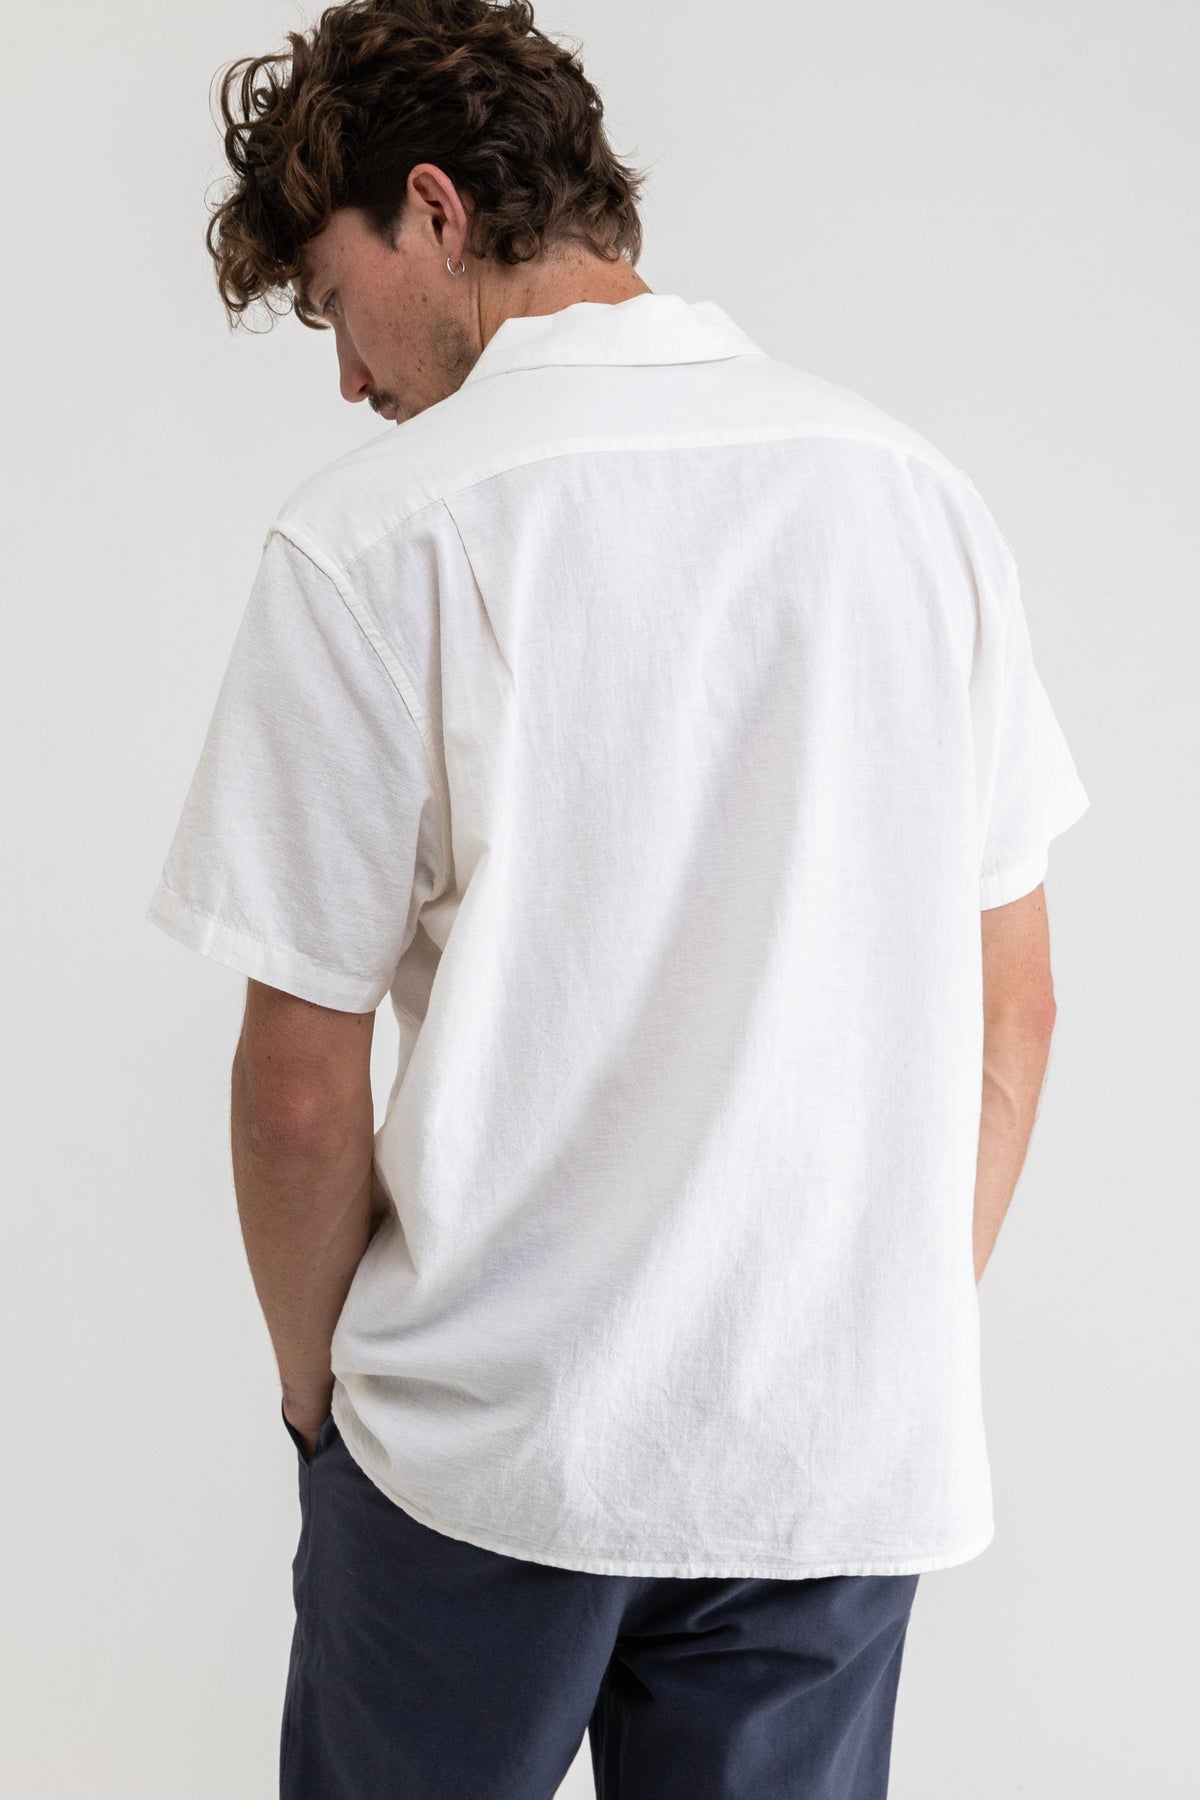 Rhythm Classic Linen SS Shirt - White